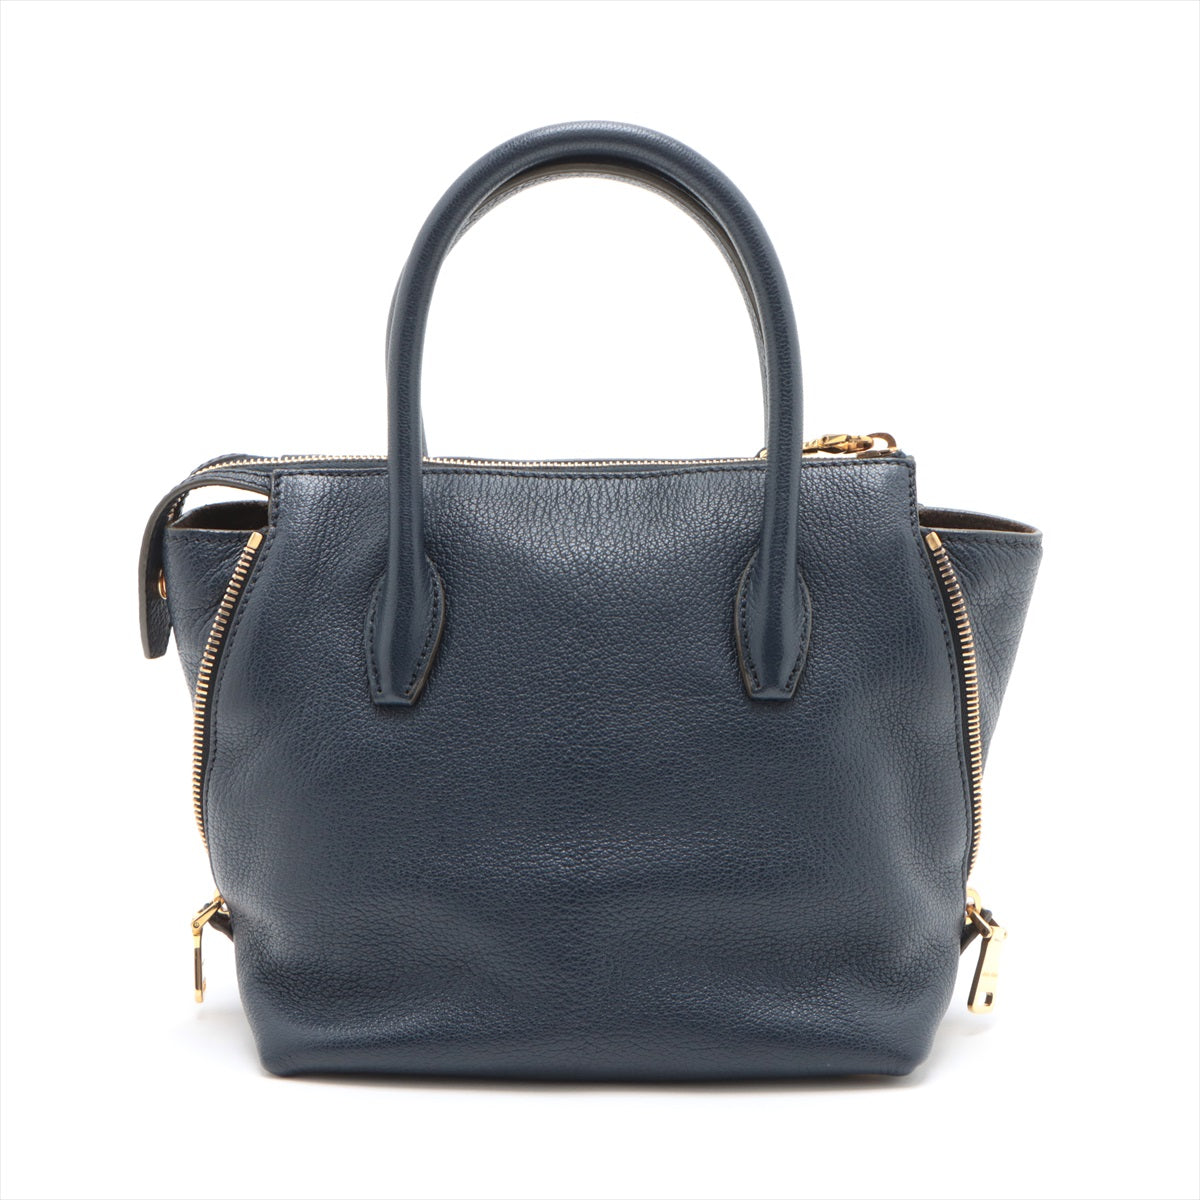 Miu Miu Leather 2 Way Handbag Navy Blue 5BA003